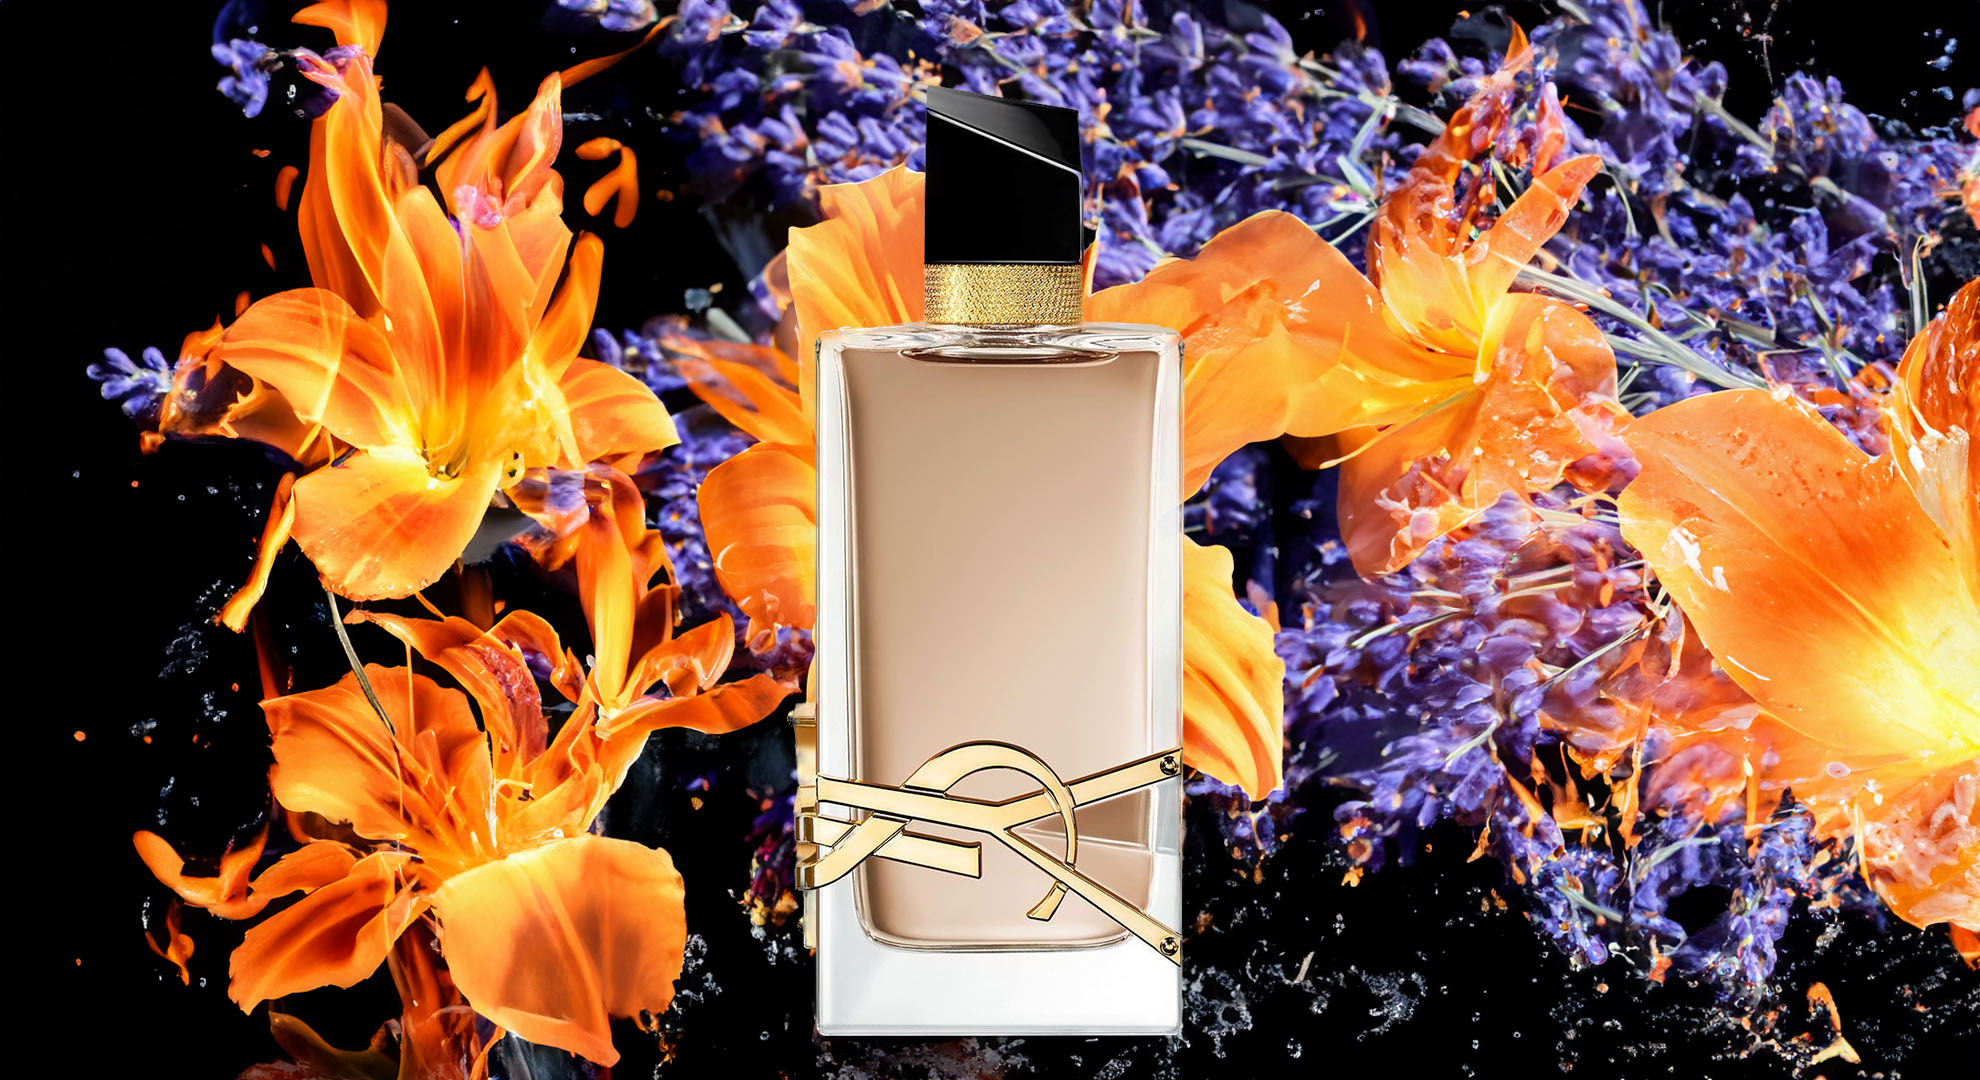 yves saint laurent unveils libre flowers & flames a sensual reinvention of a modern classic